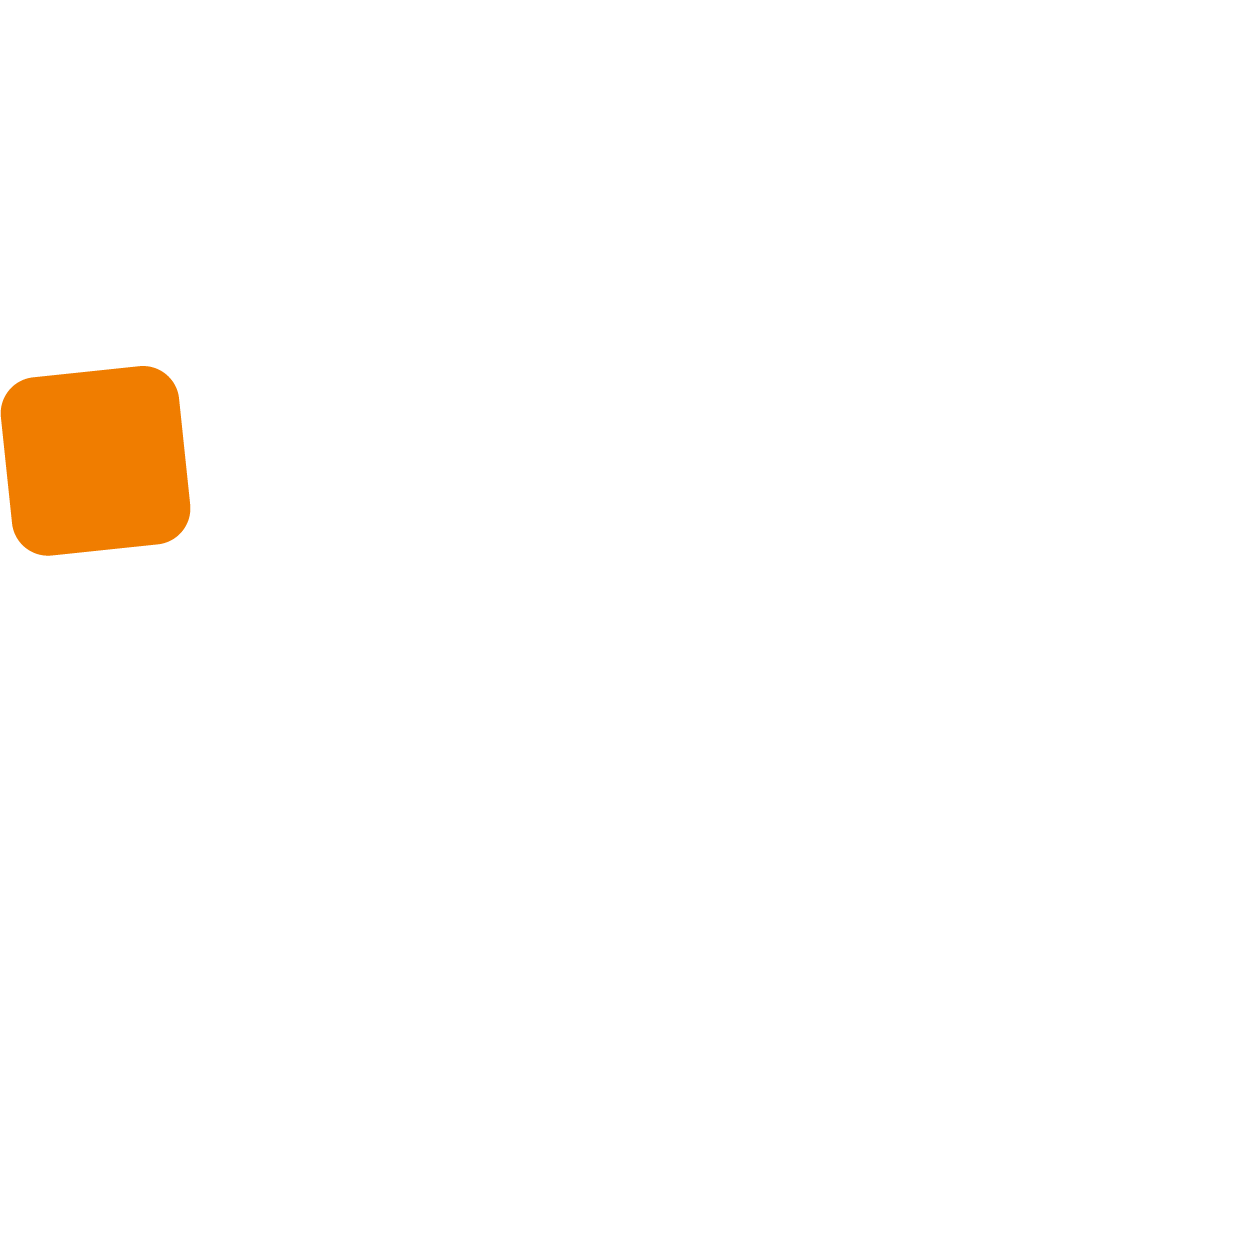 GIB Logo